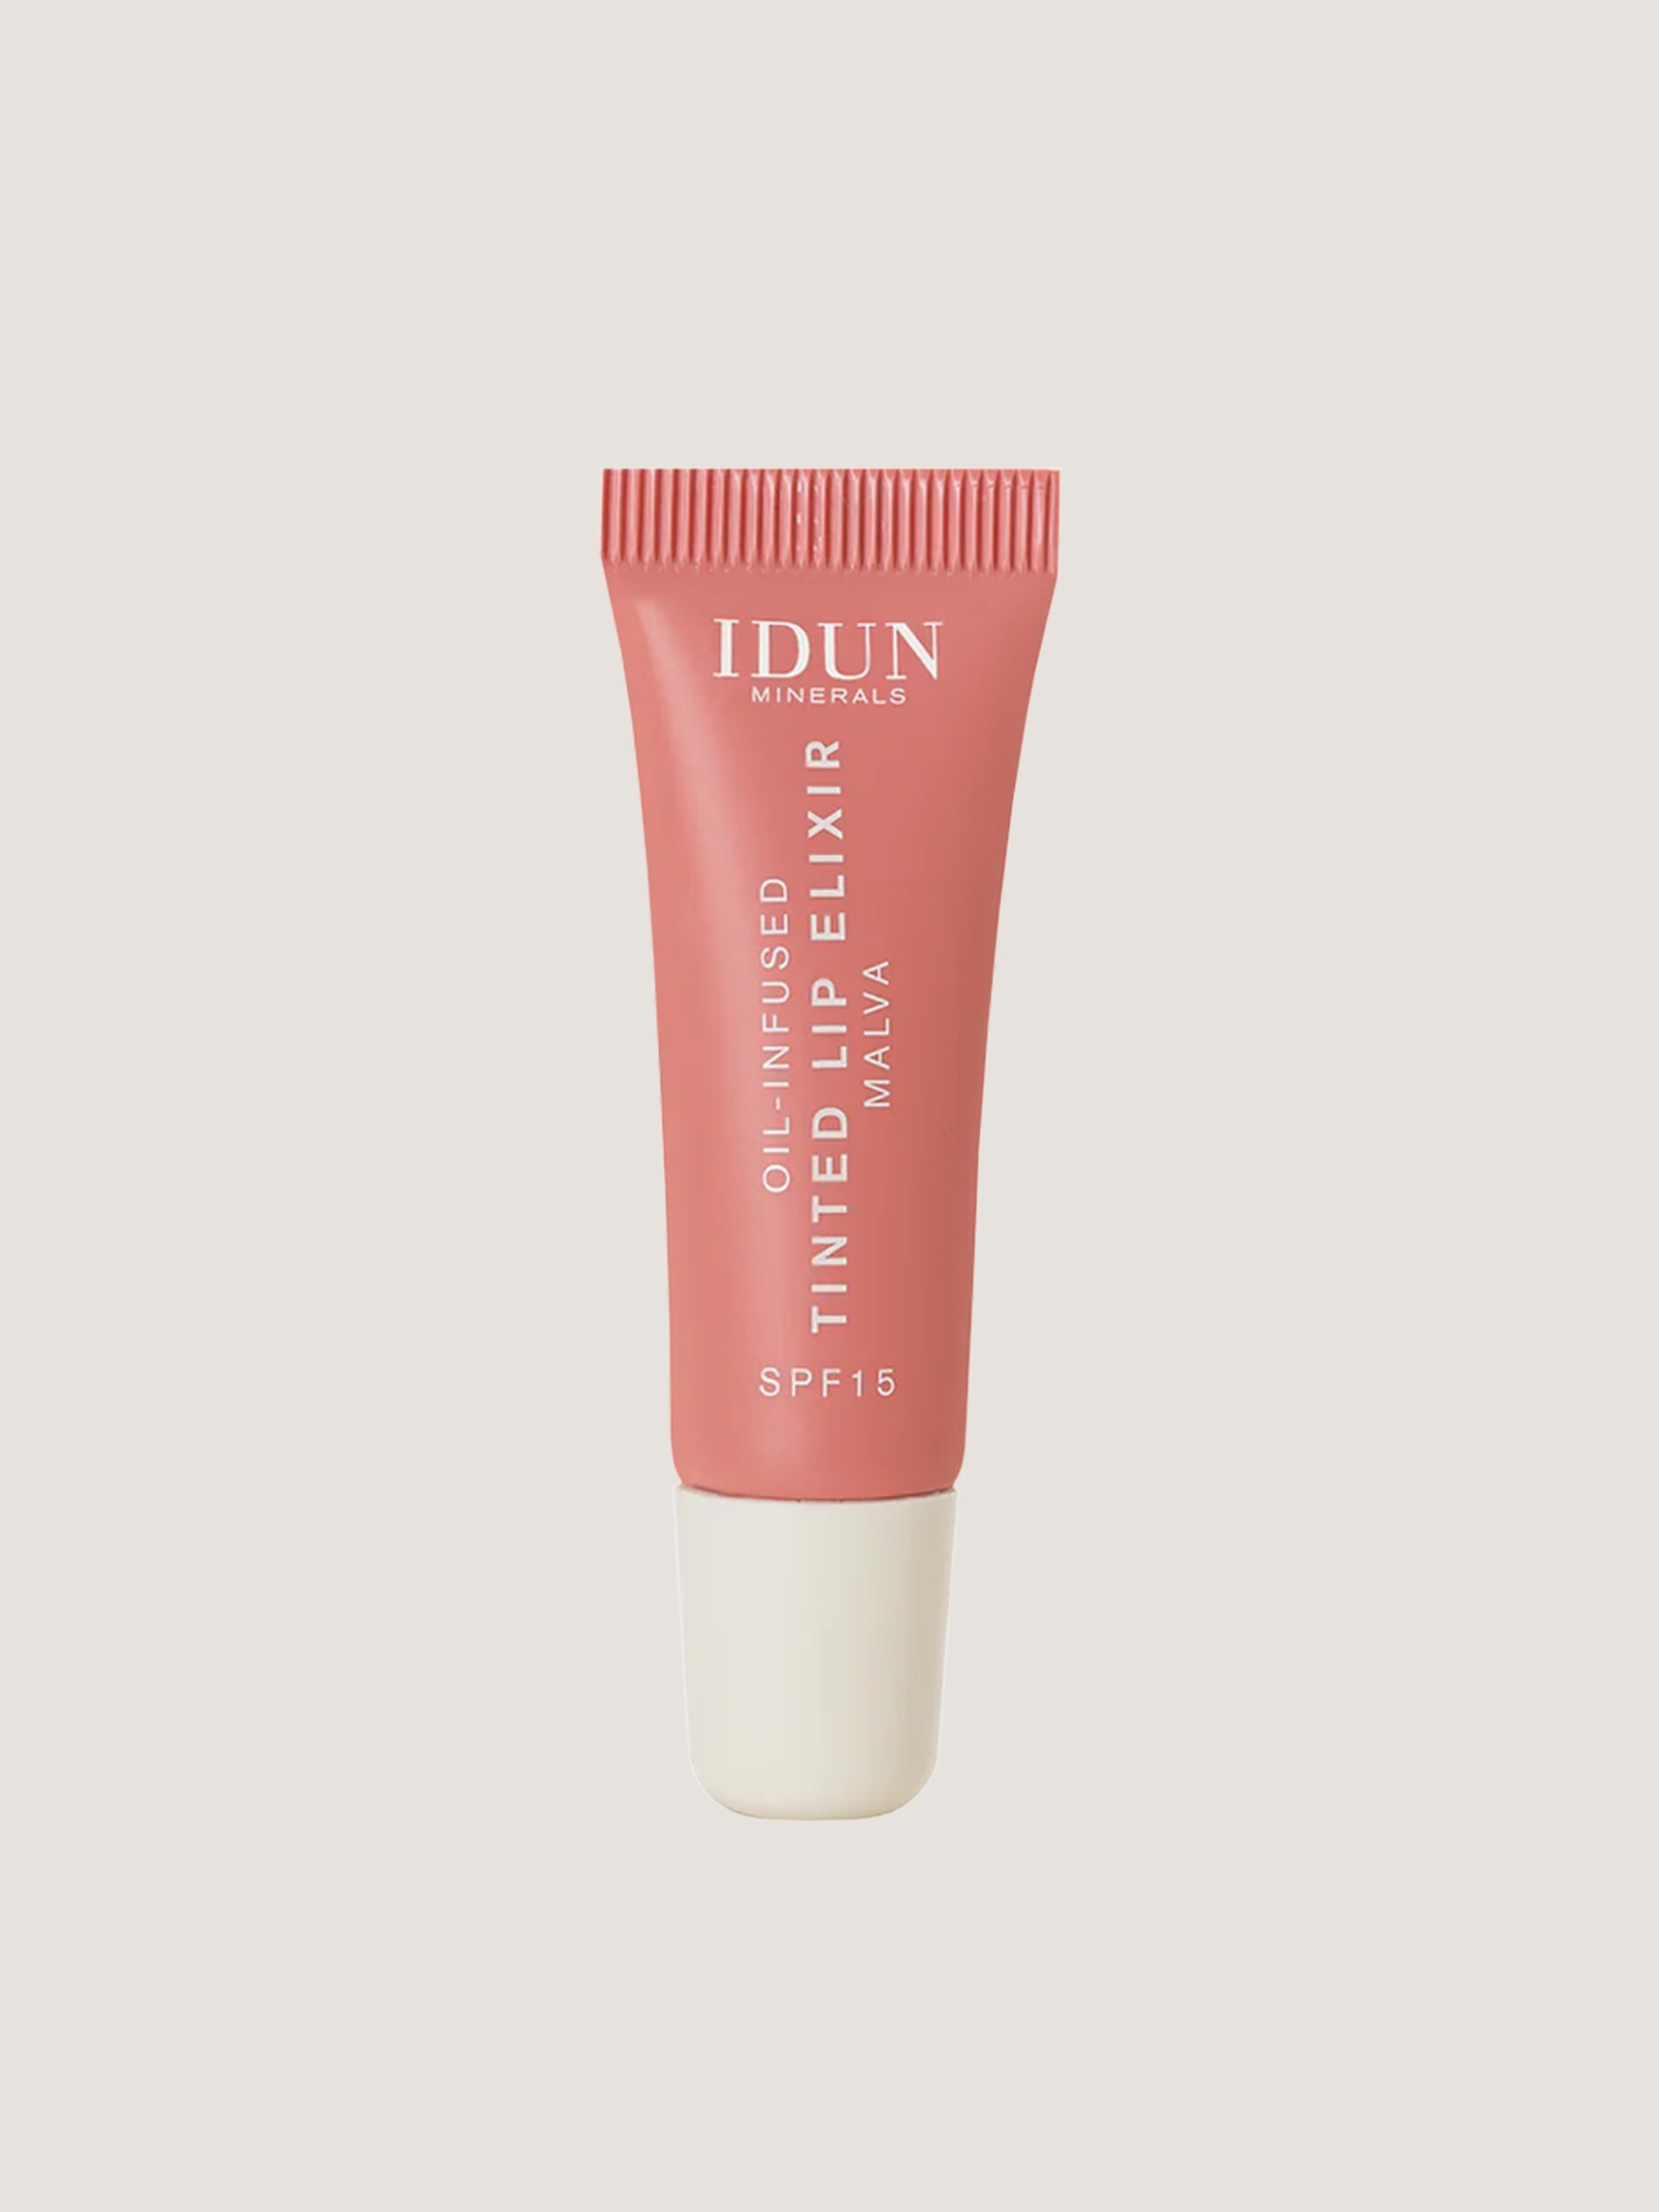 IDUN Minerals Oil-Infused Tinted Lip Elixir SPF 15@2x